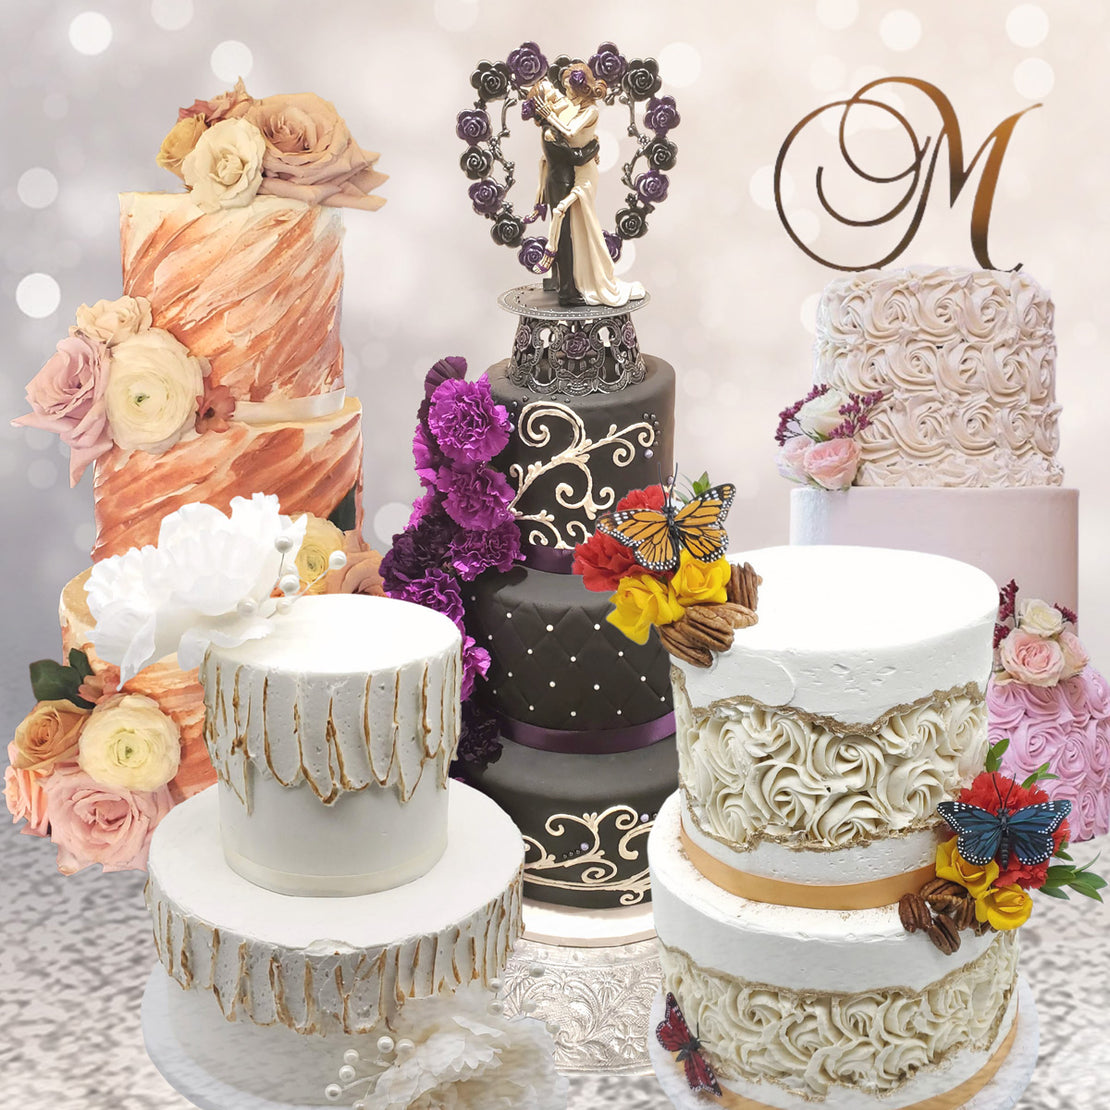 Custom Wedding Cake Order - Save The Date!